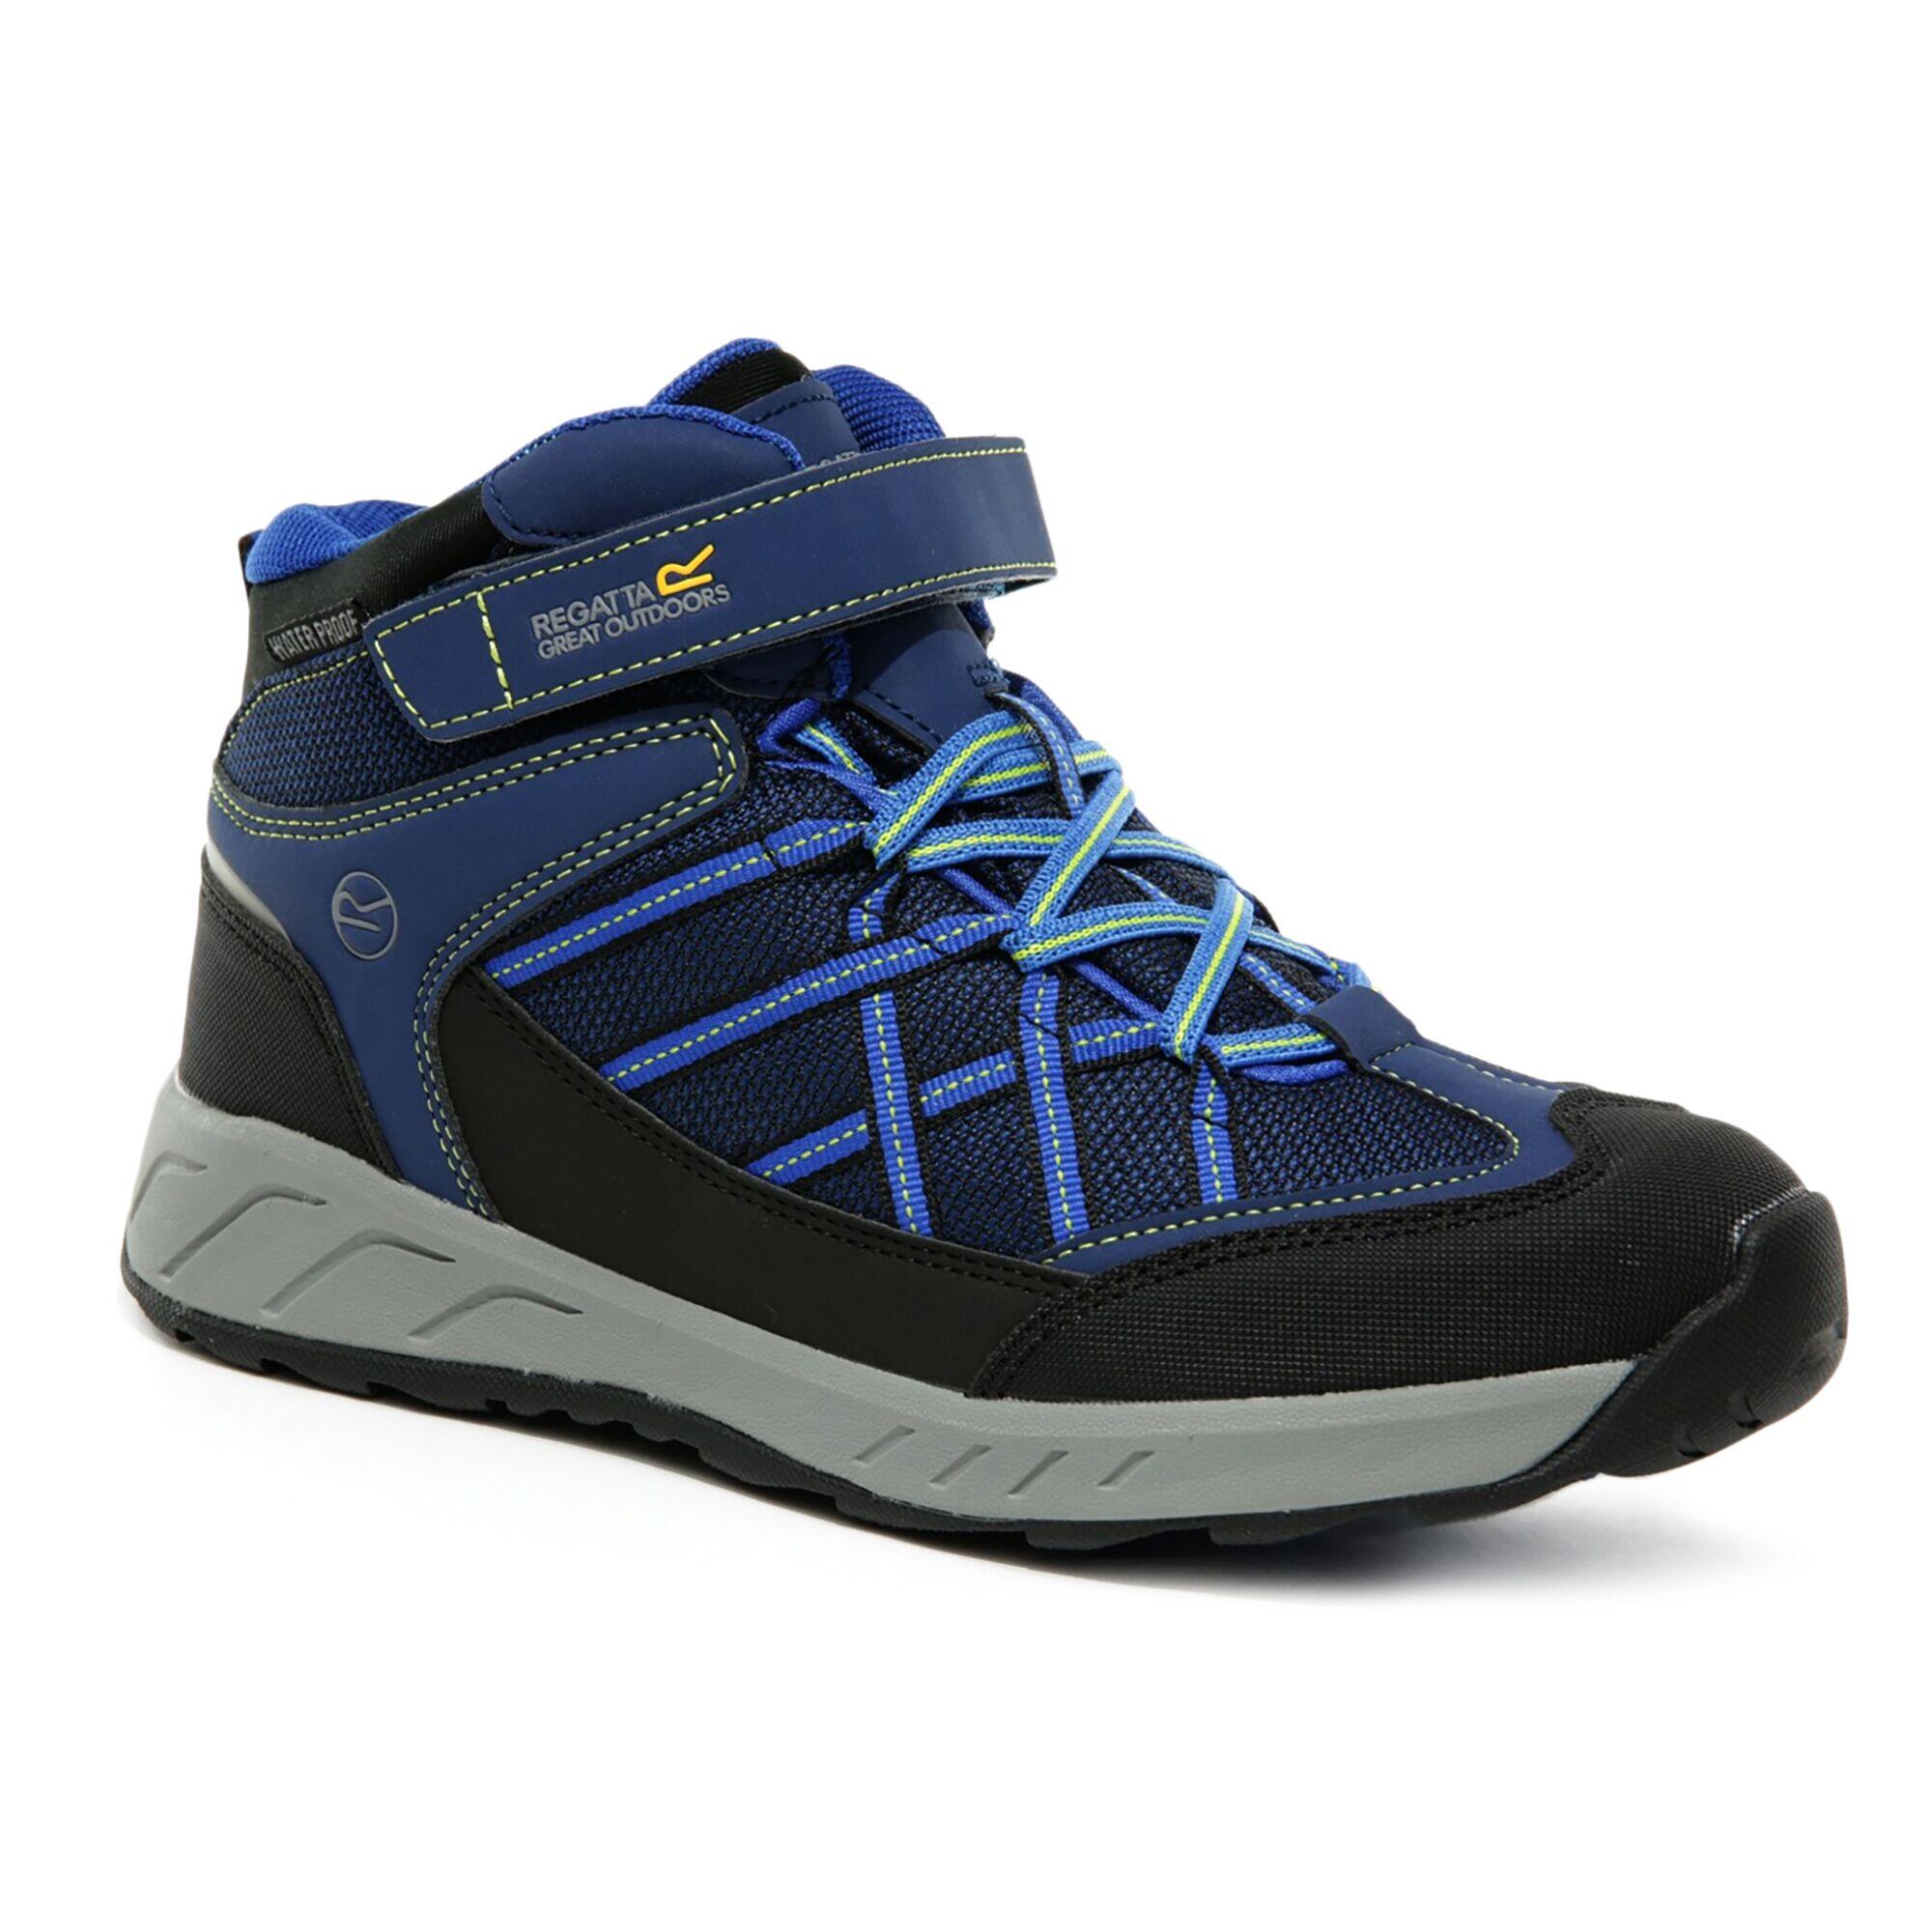 Samaris V Kids' Hiking Waterproof Mid Boots - Dark Blue/Neon Yellow 1/6